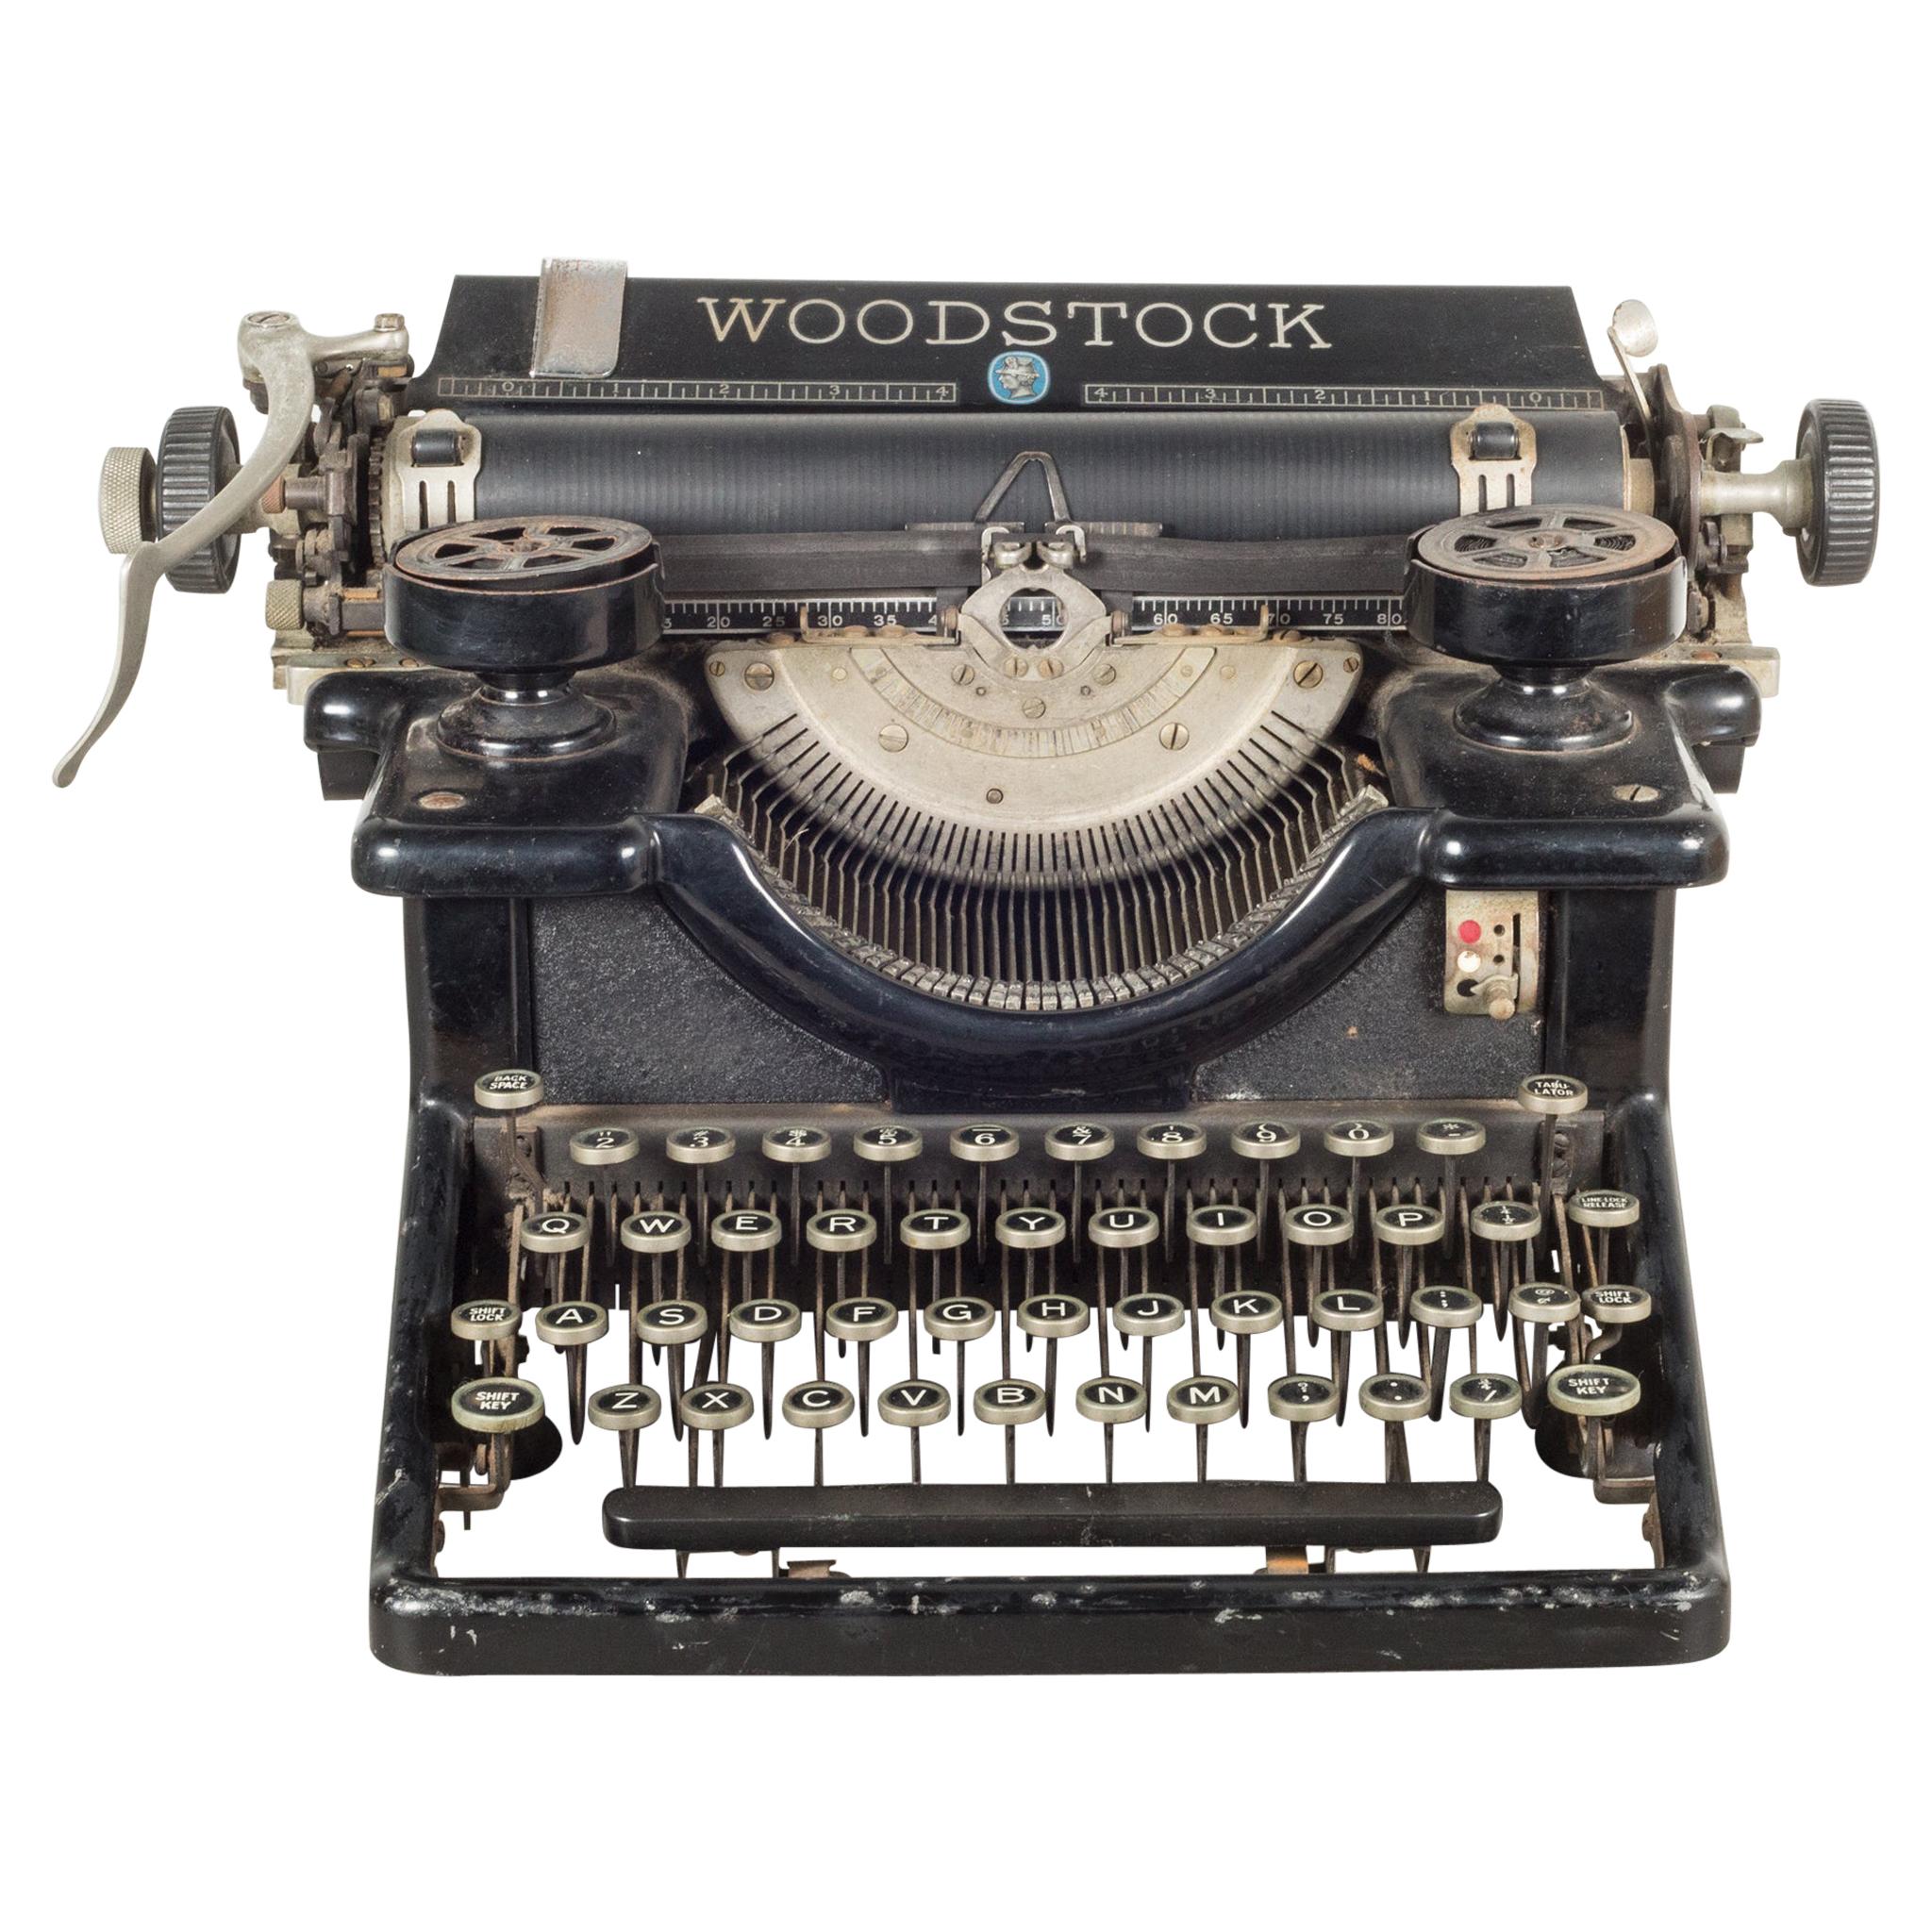 Antique Woodstock Typewriter, circa 1933